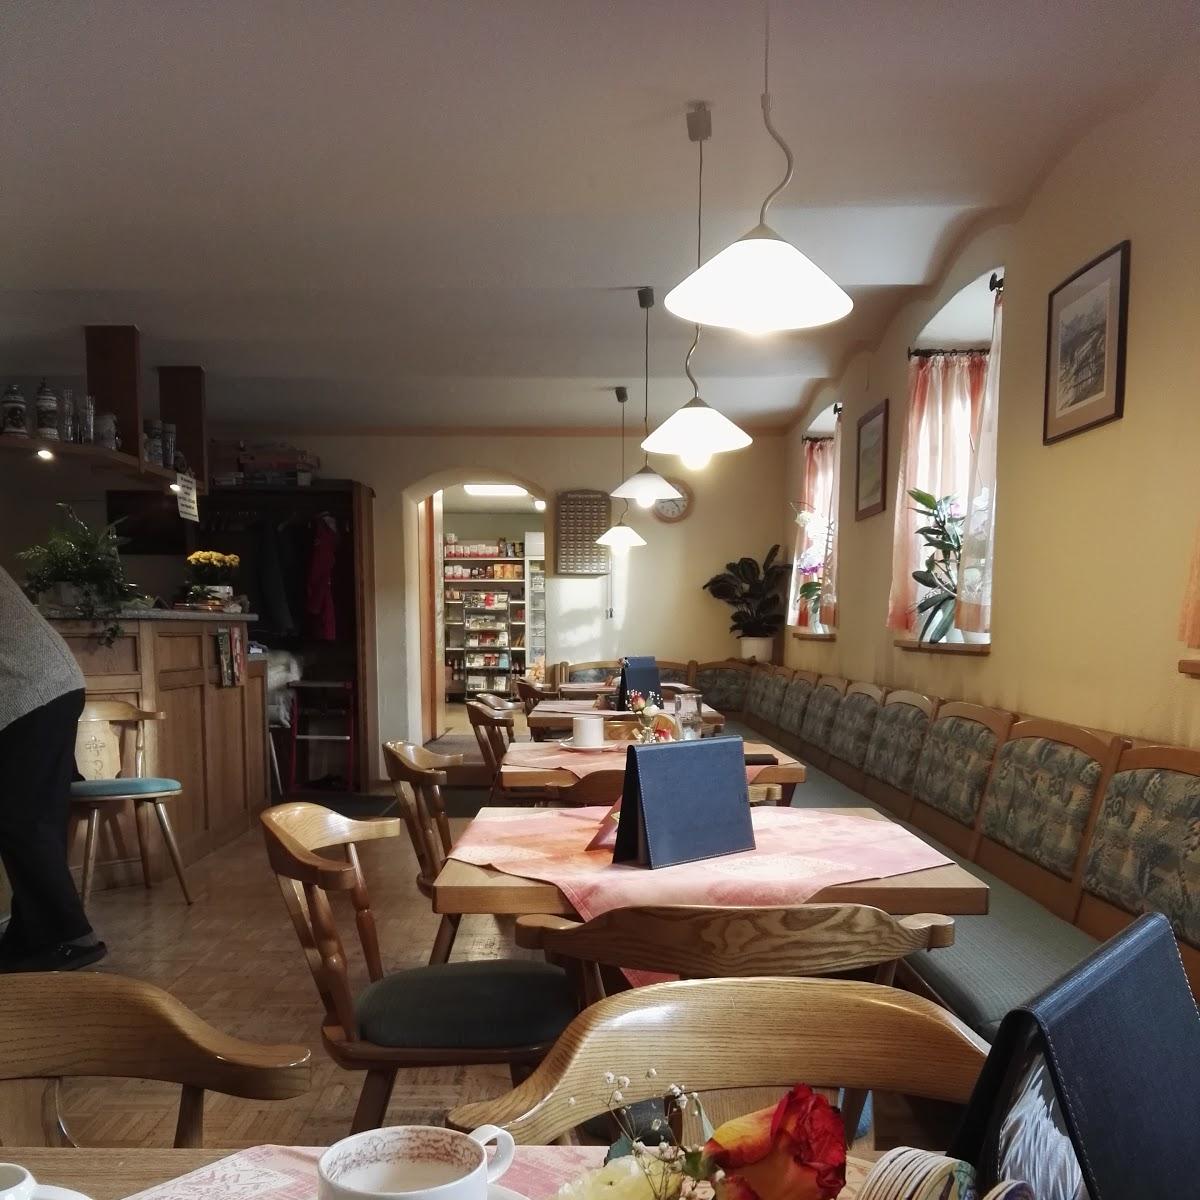 Restaurant "Cafe Zur Alten Backstube" in Weiler-Simmerberg